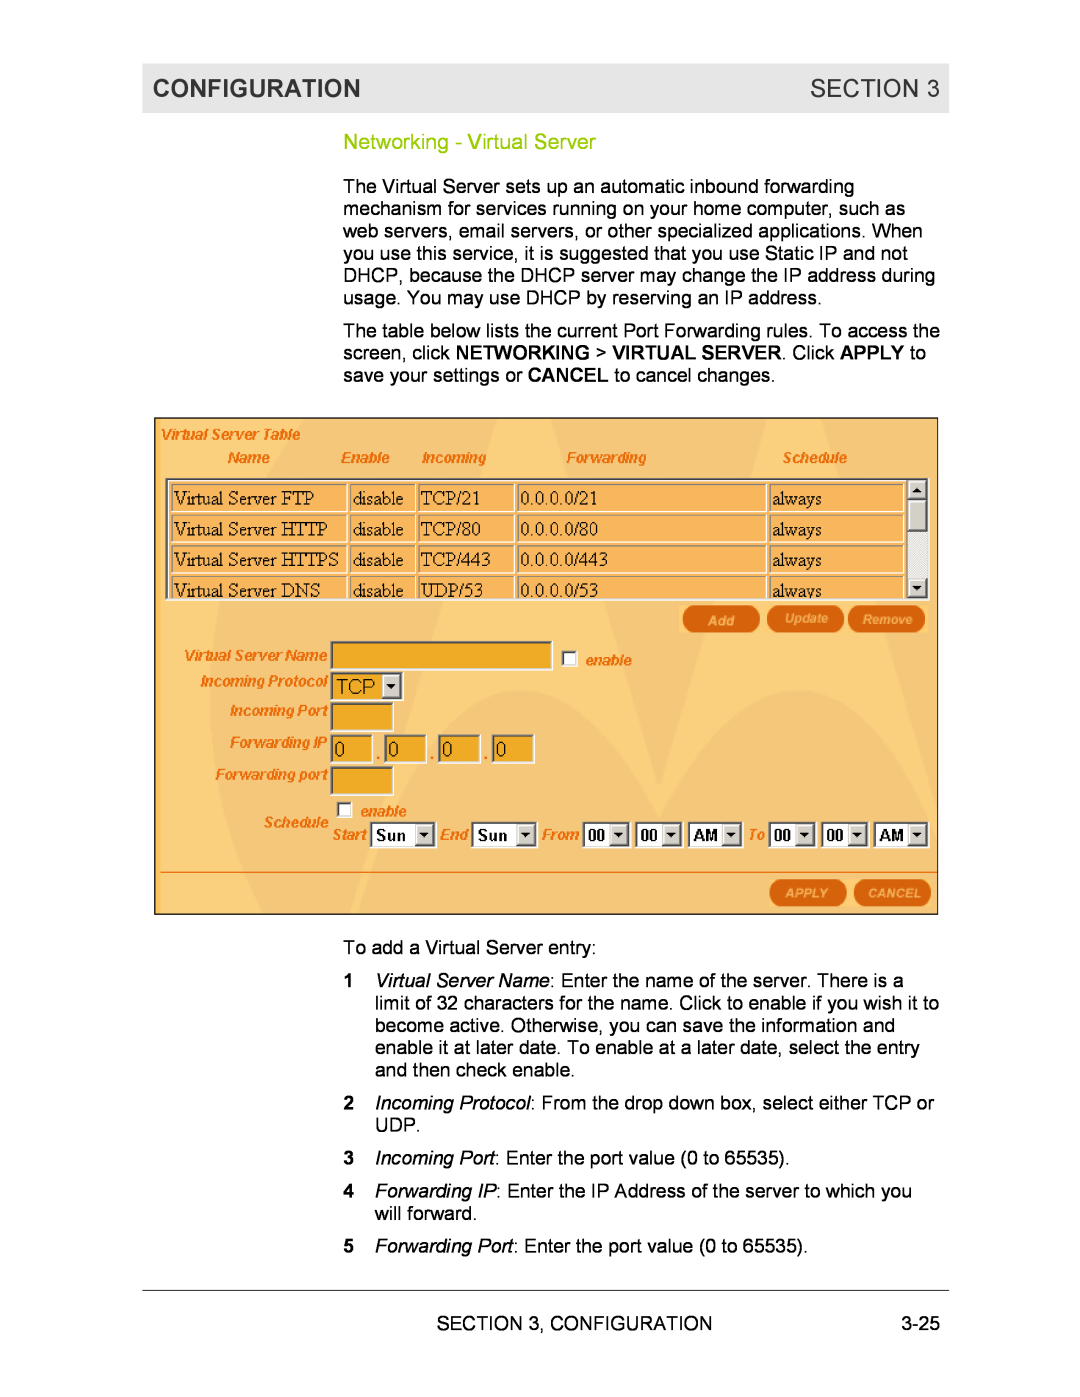 Motorola BR700 manual Networking - Virtual Server, Configuration, Section 